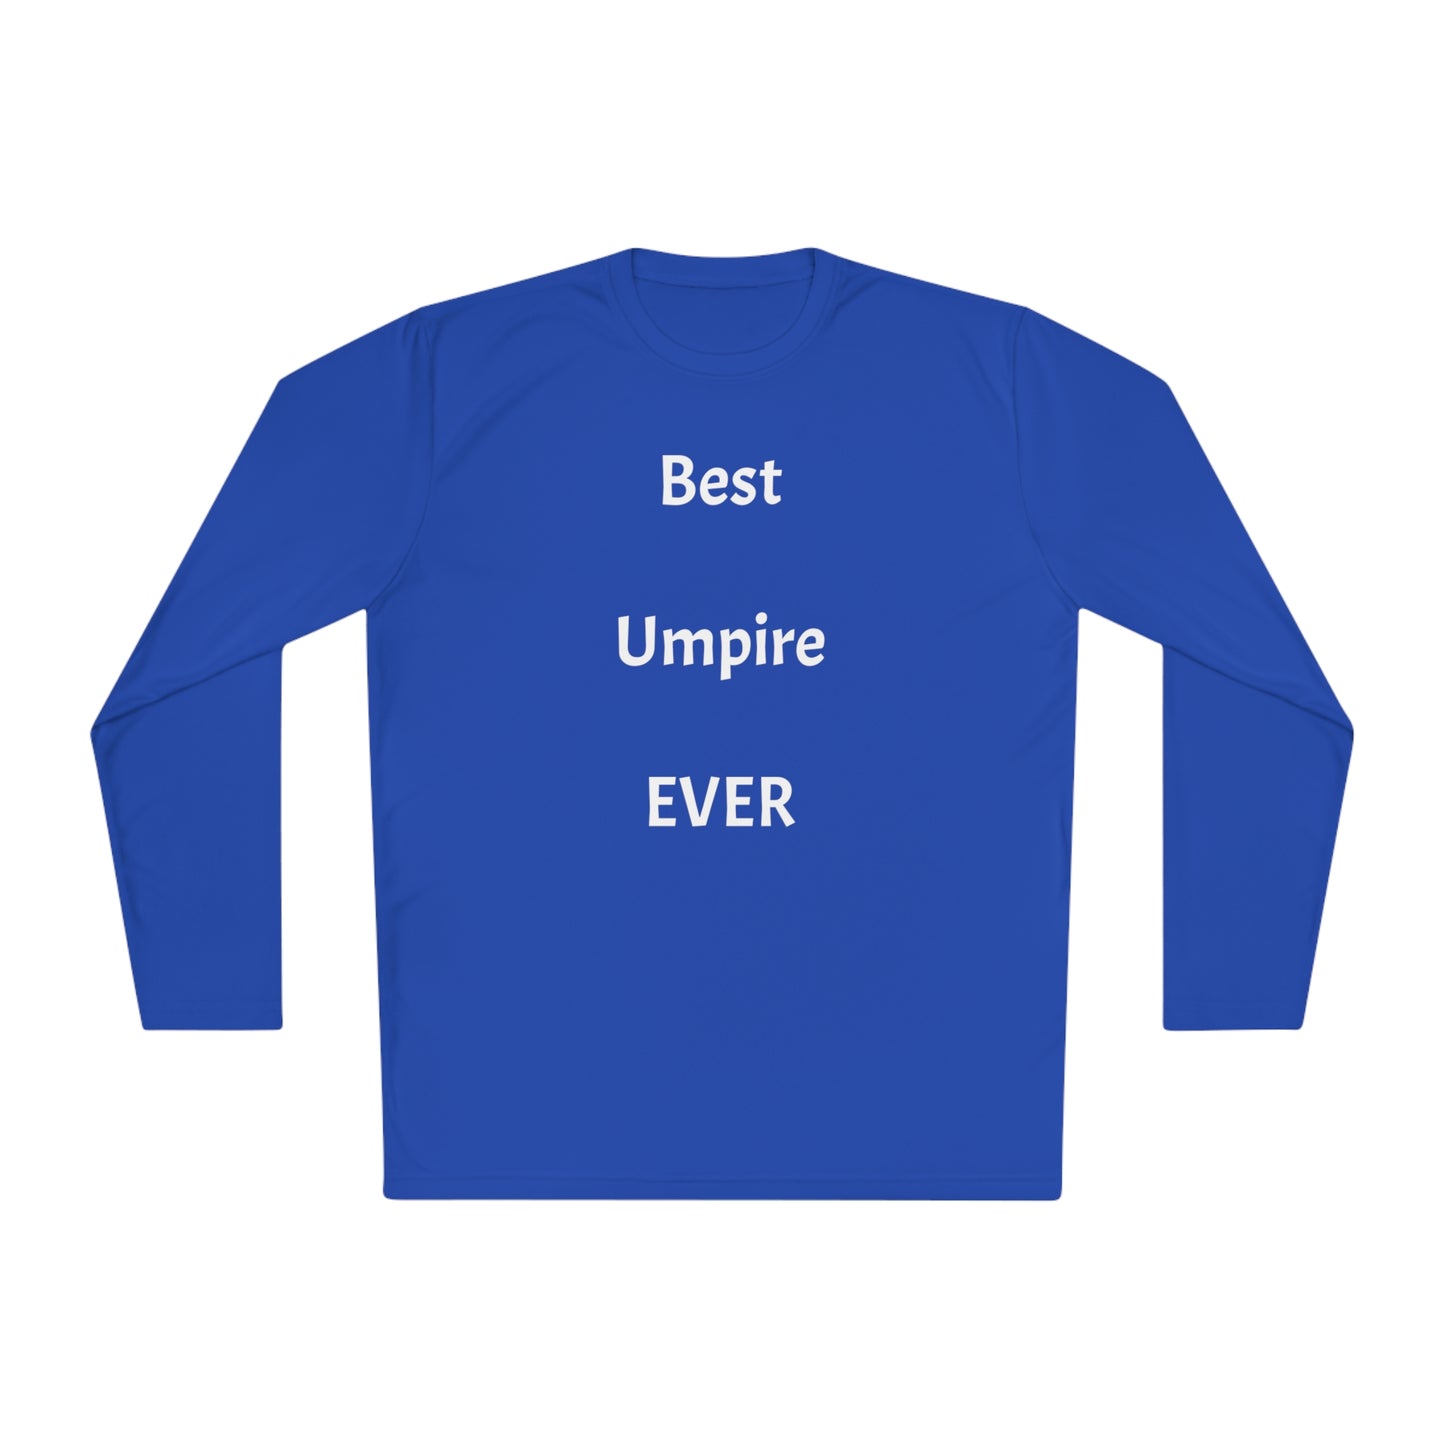 Best Umpire EVER Unisex Lightweight Long Sleeve Tee